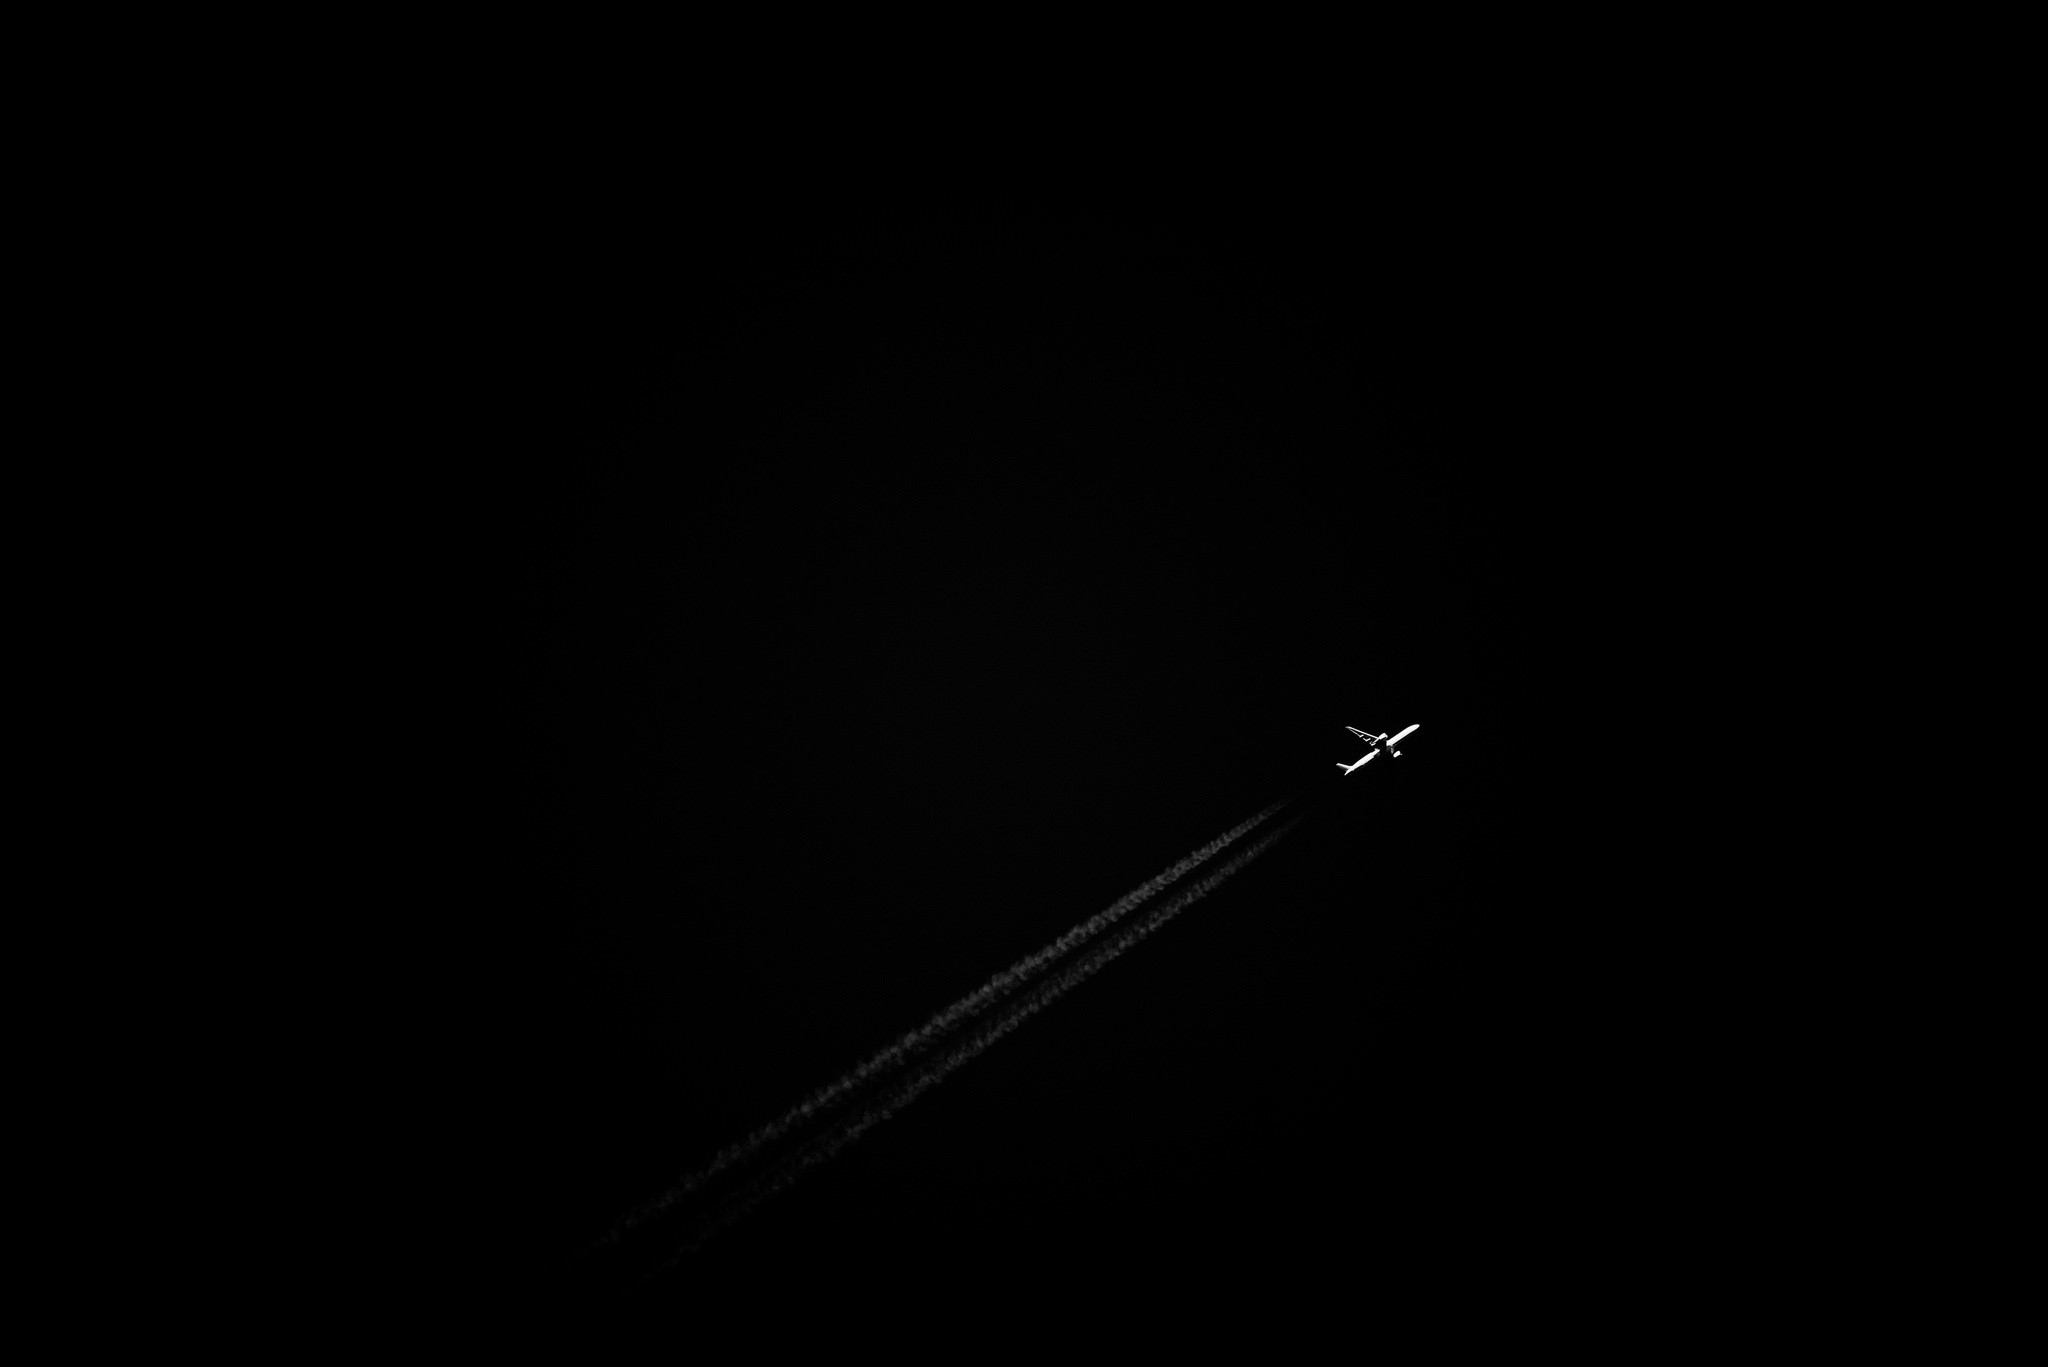 Wallpaper / dark, minimalism, vehicle, aircraft, black, black background, contrails, airplane free download